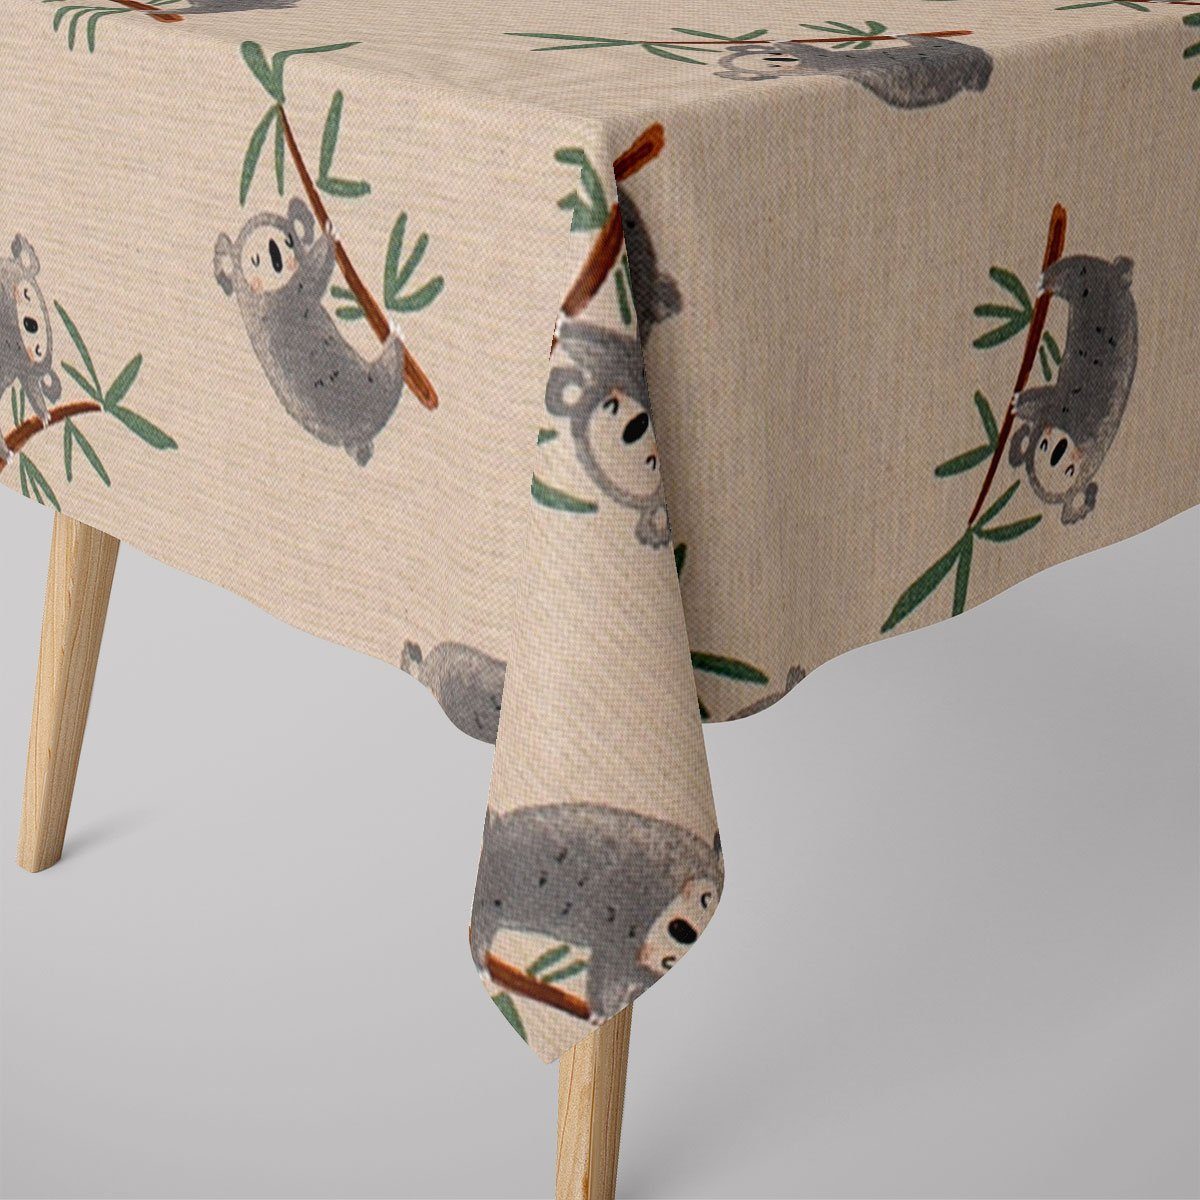 SCHÖNER LEBEN. Tischdecke SCHÖNER LEBEN. Tischdecke Koala Sleeping Koalabären Zweige natur grau, handmade | Tischdecken